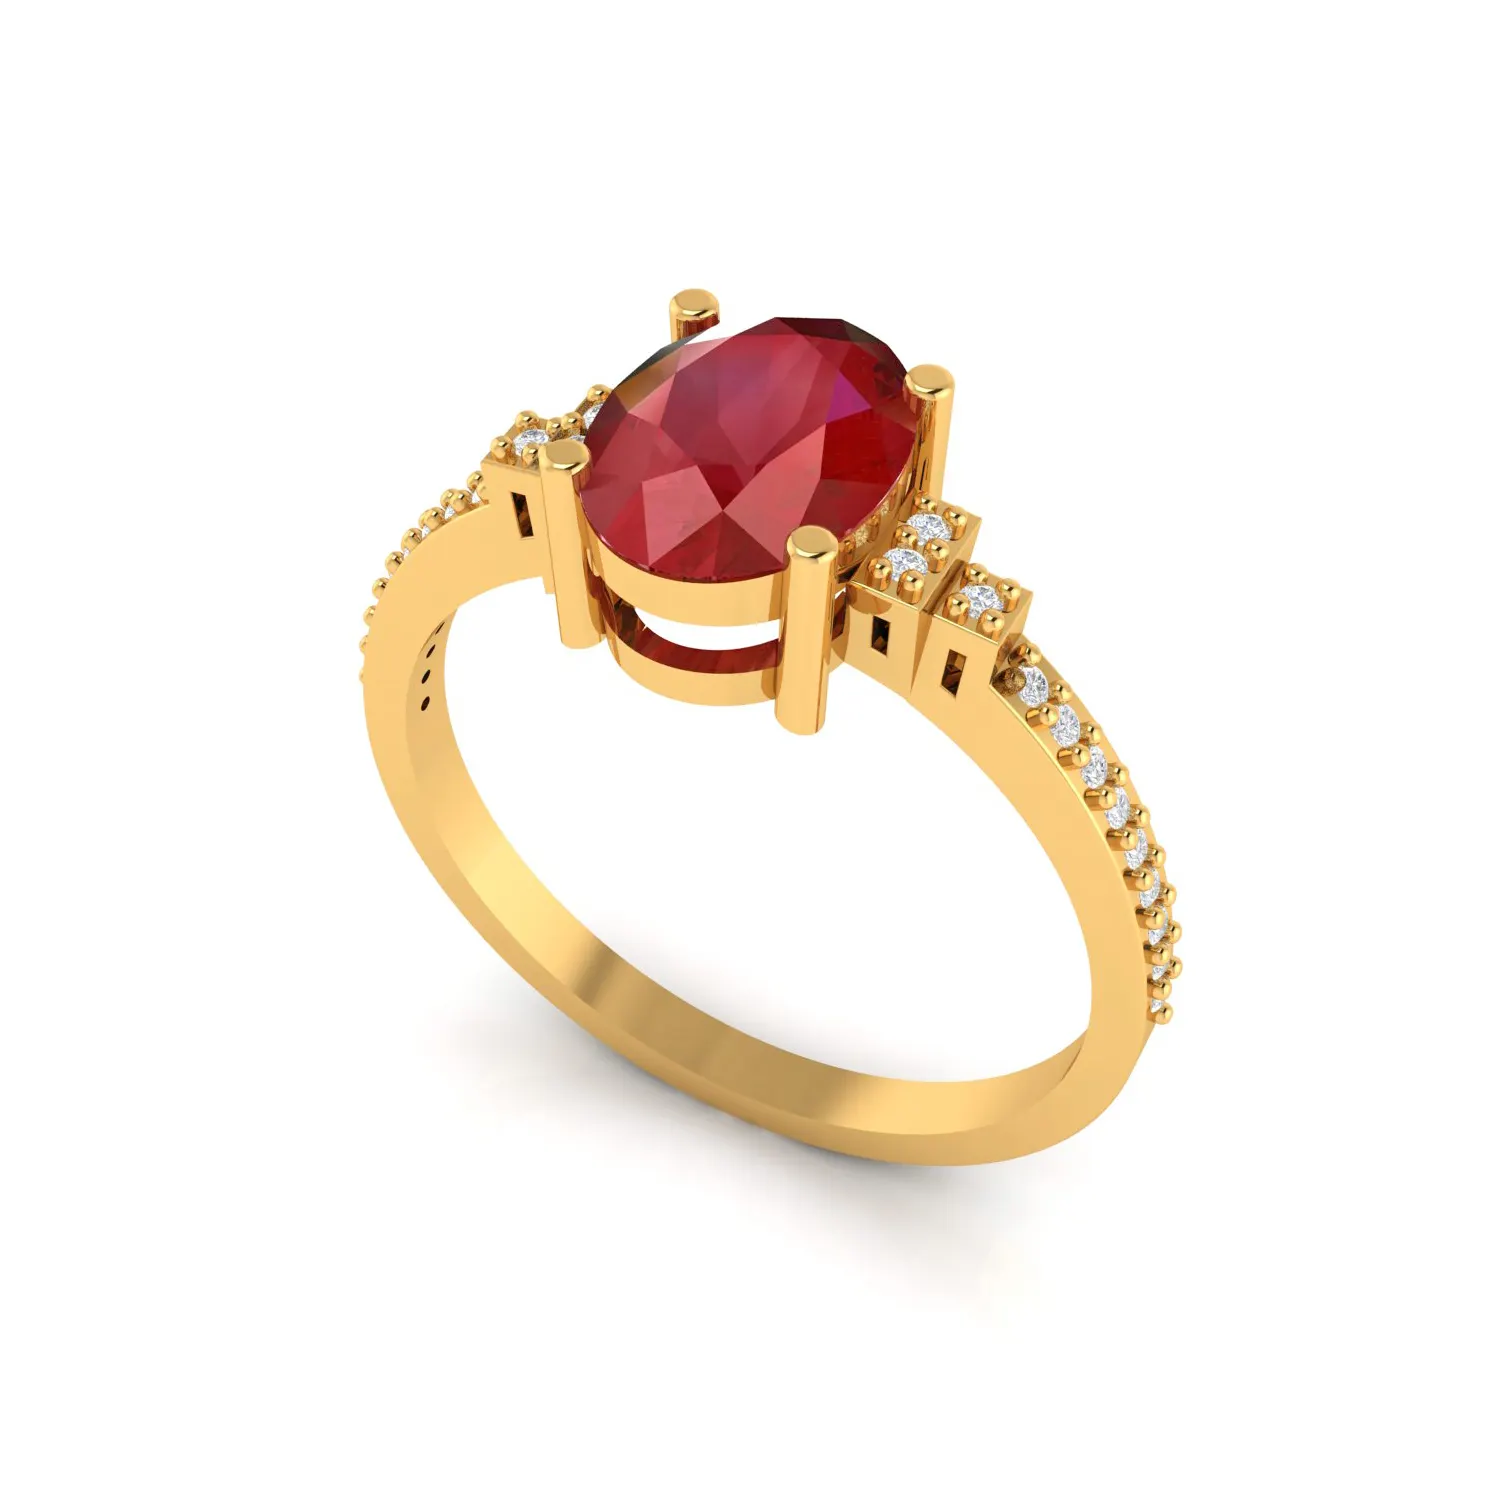 Kualitas tinggi padat 18k kuning emas asli Oval batu permata delima berlian Pave Cincin soliter cincin pertunangan perhiasan bagus produsen